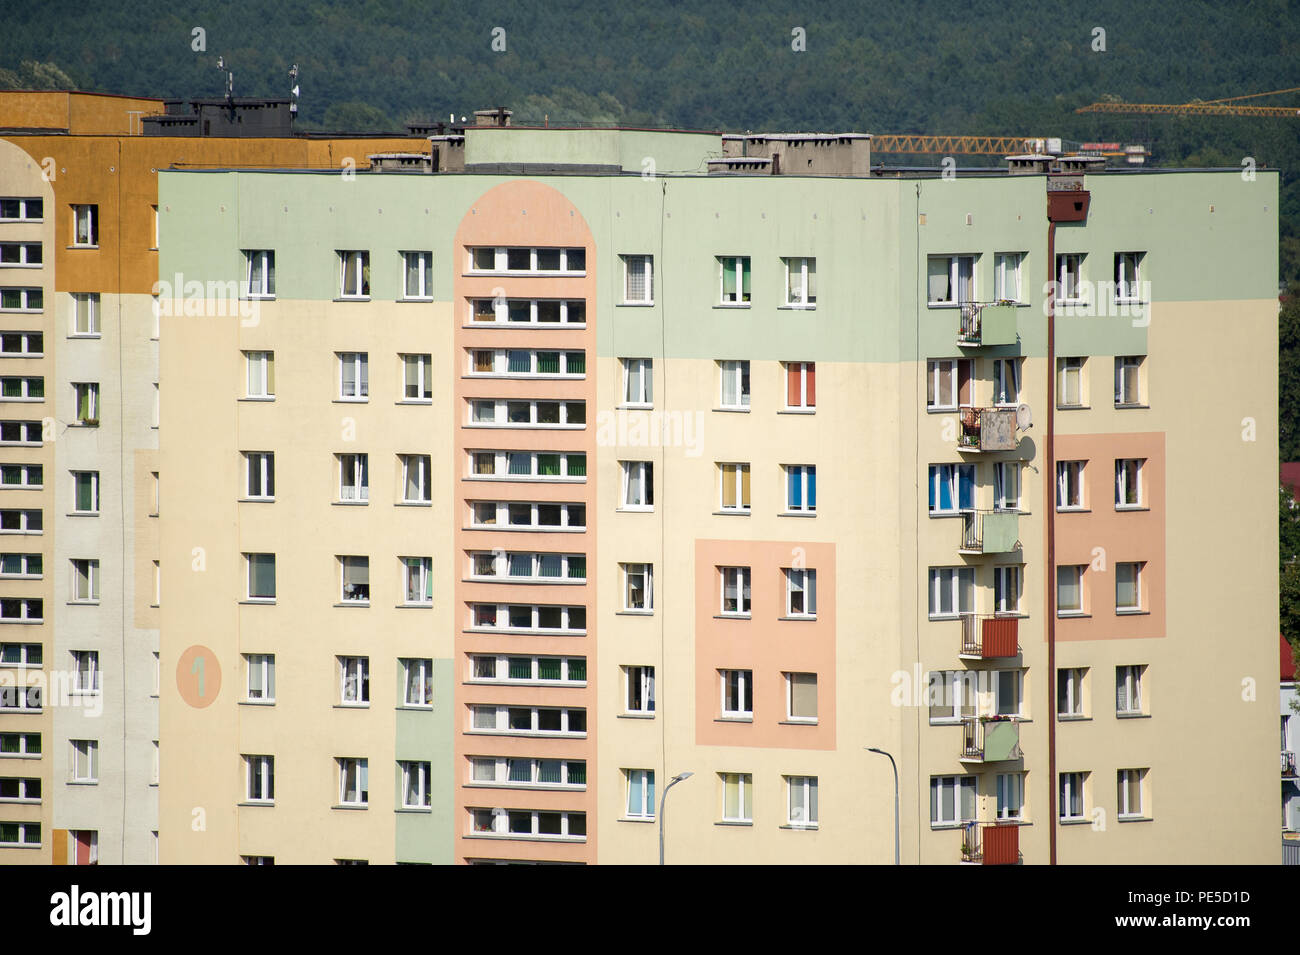 Communist era apartment buildings in Rumia, Poland. August 8th 2018 © Wojciech Strozyk / Alamy Stock Photo Stock Photo